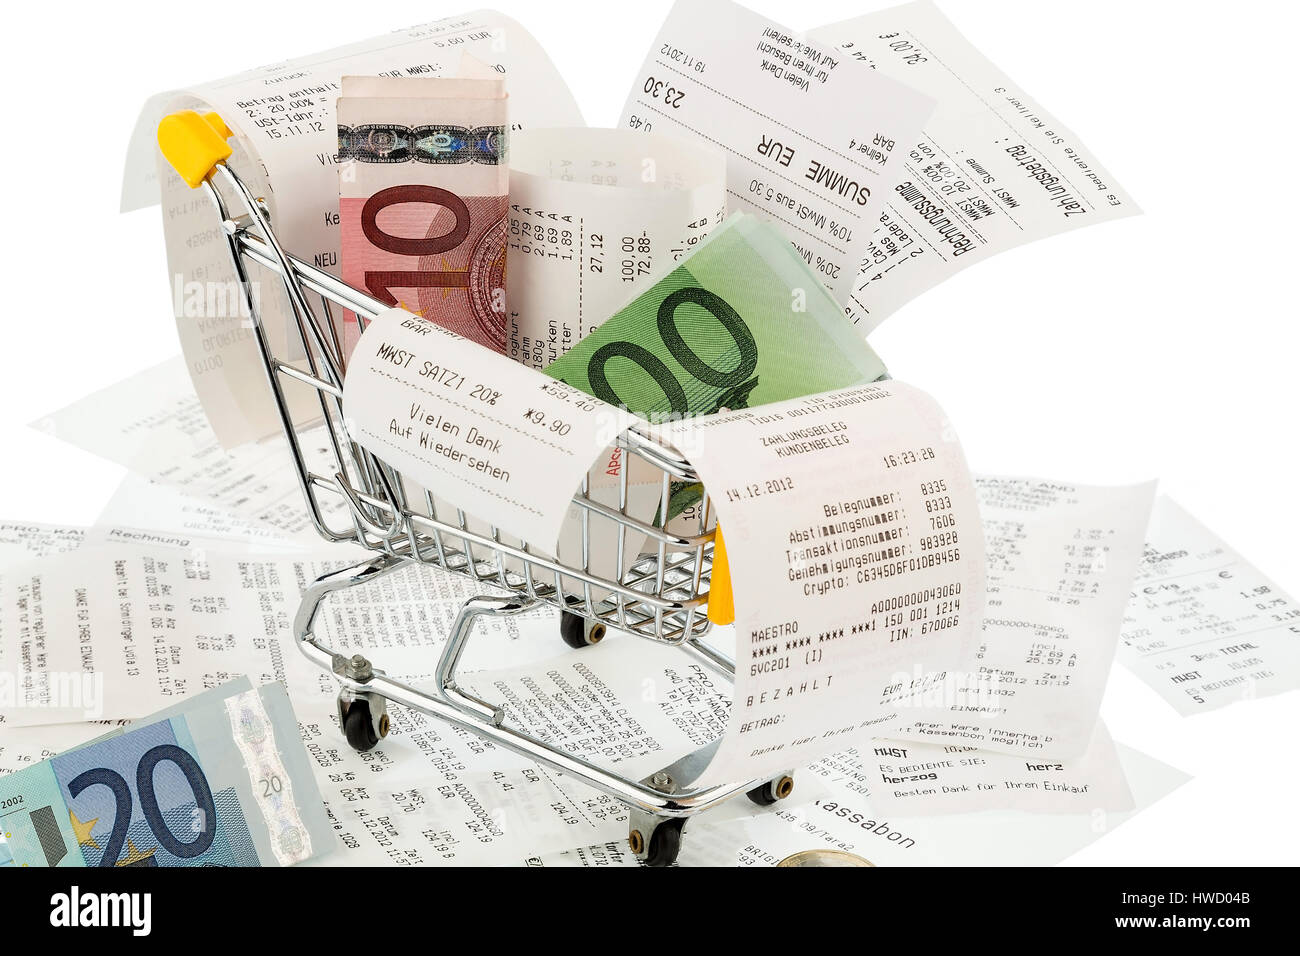 Shopping carts, bank notes and receipts, symbolic photo for buying power, consumption and inflation, Einkaufswagen, Geldscheine und Kassenbons, Symbol Stock Photo